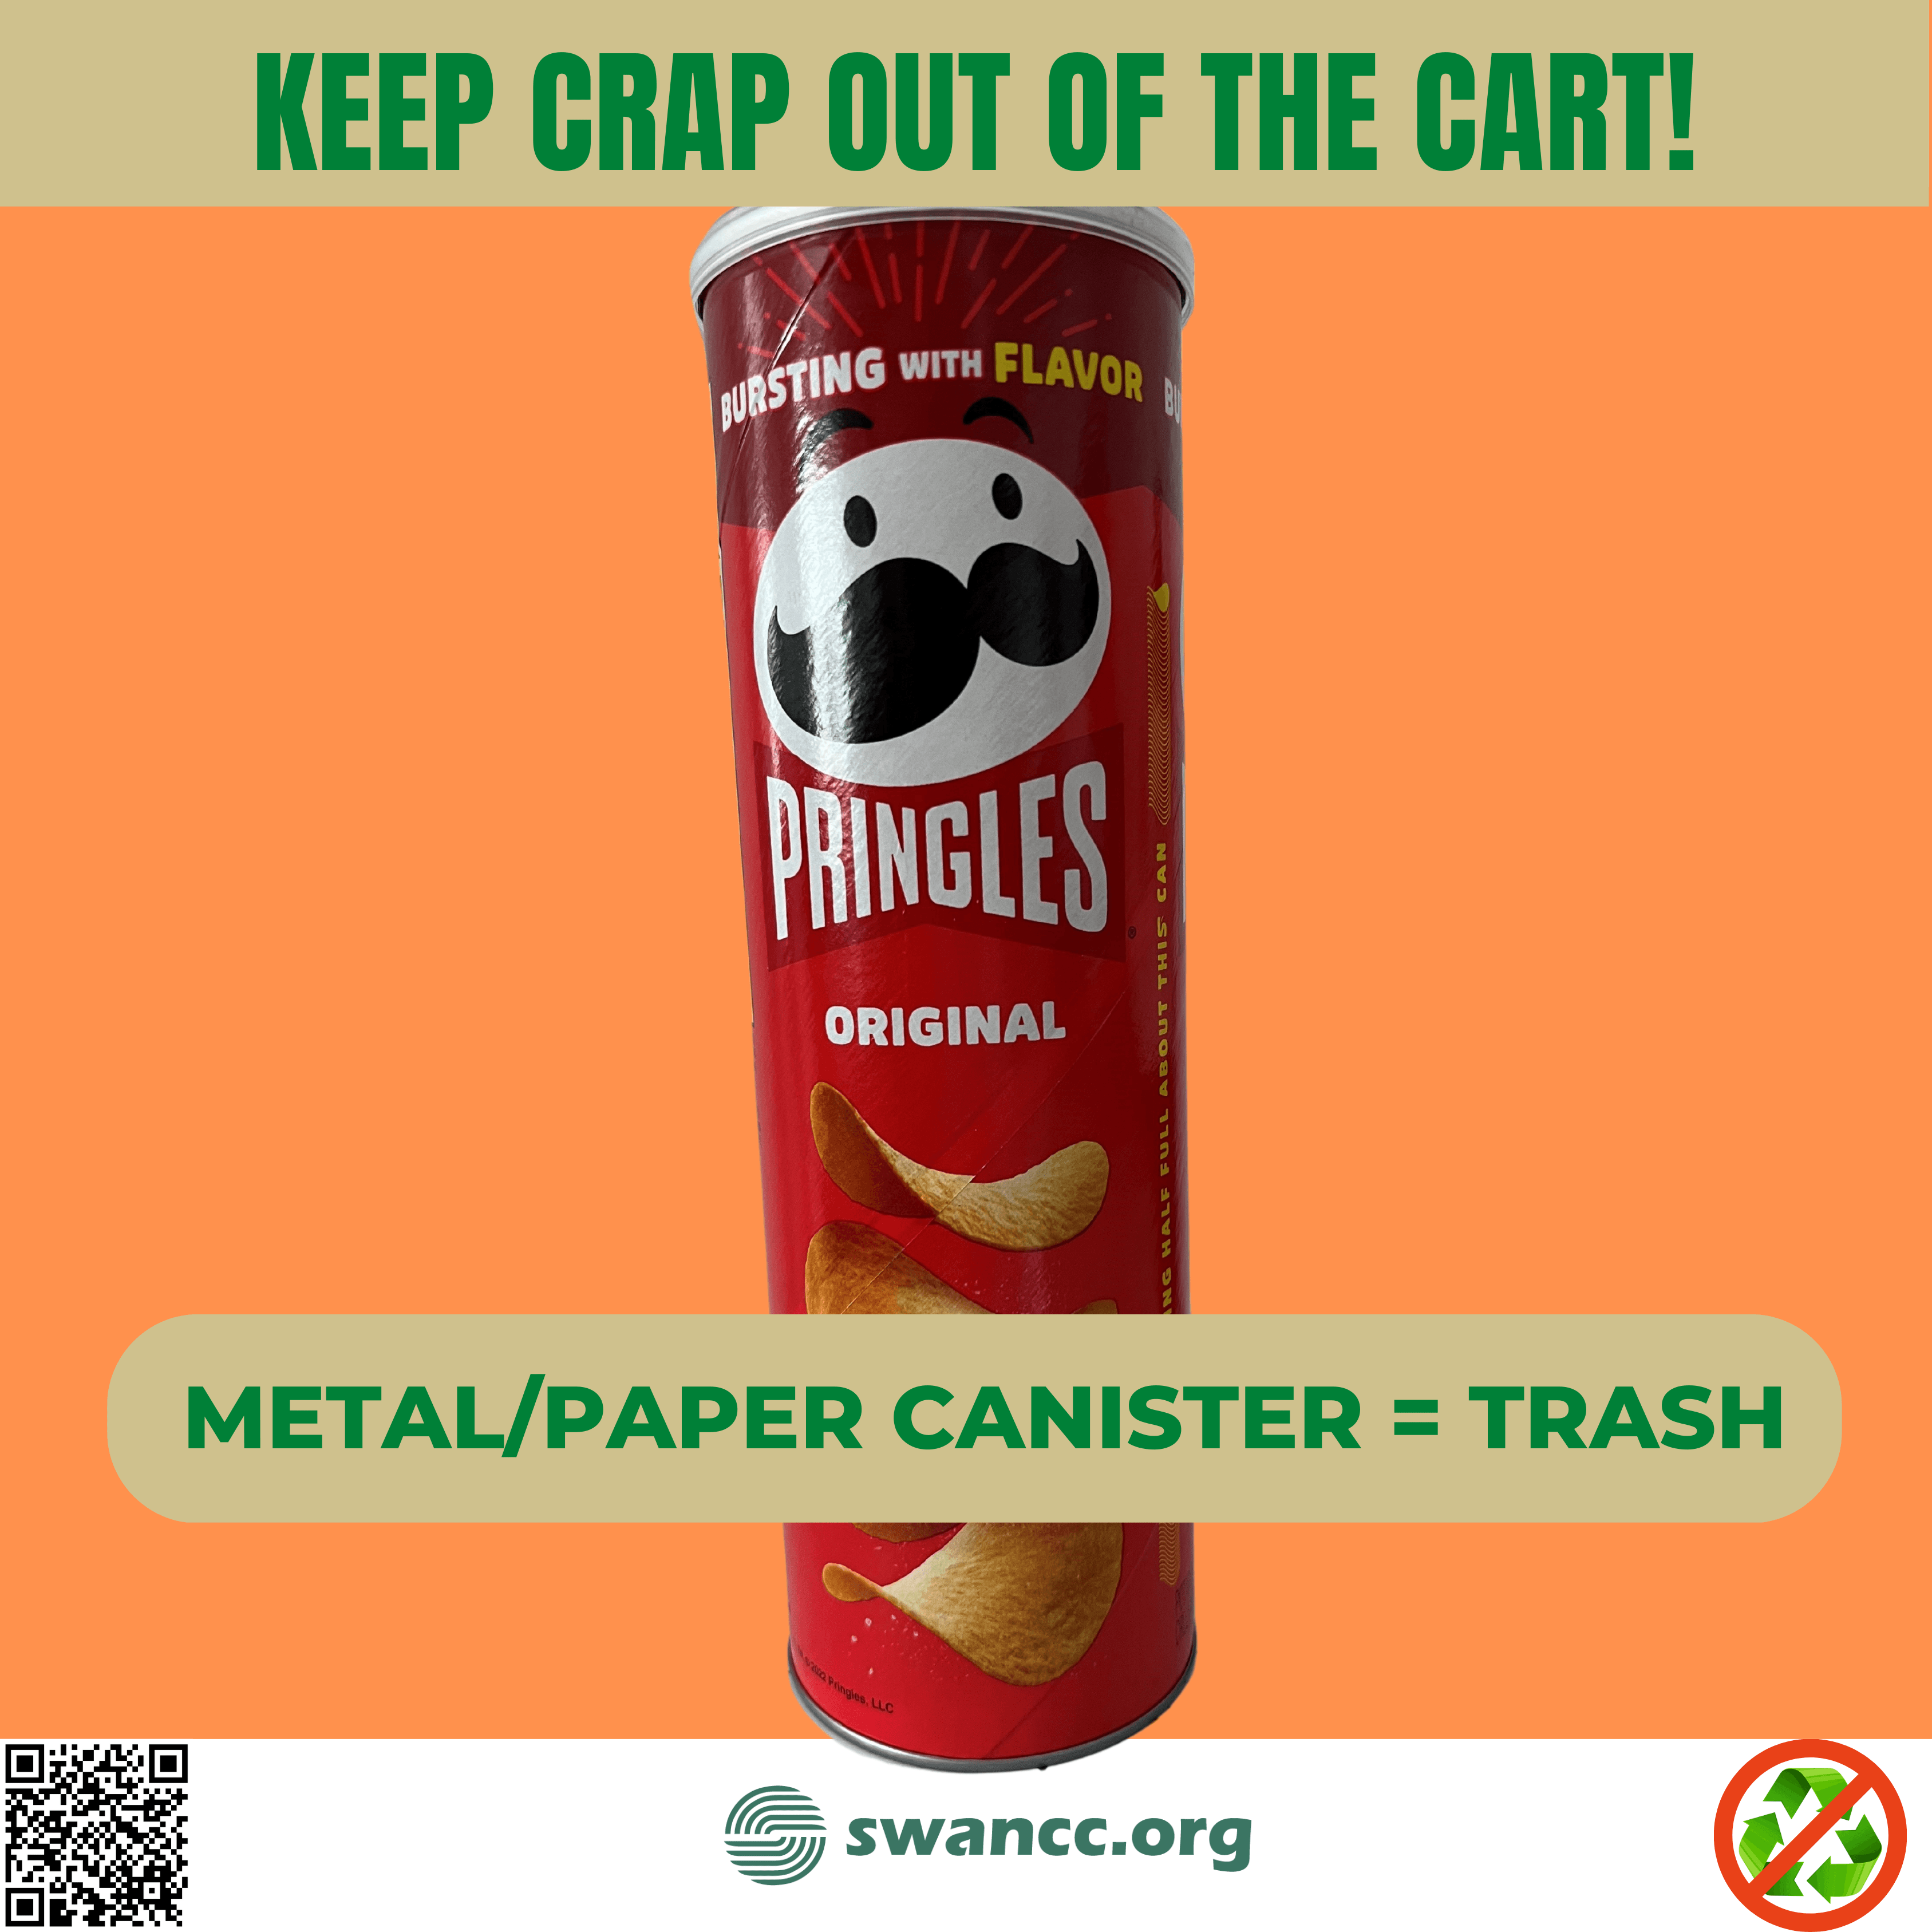 Metal / Paper Canister = Trash